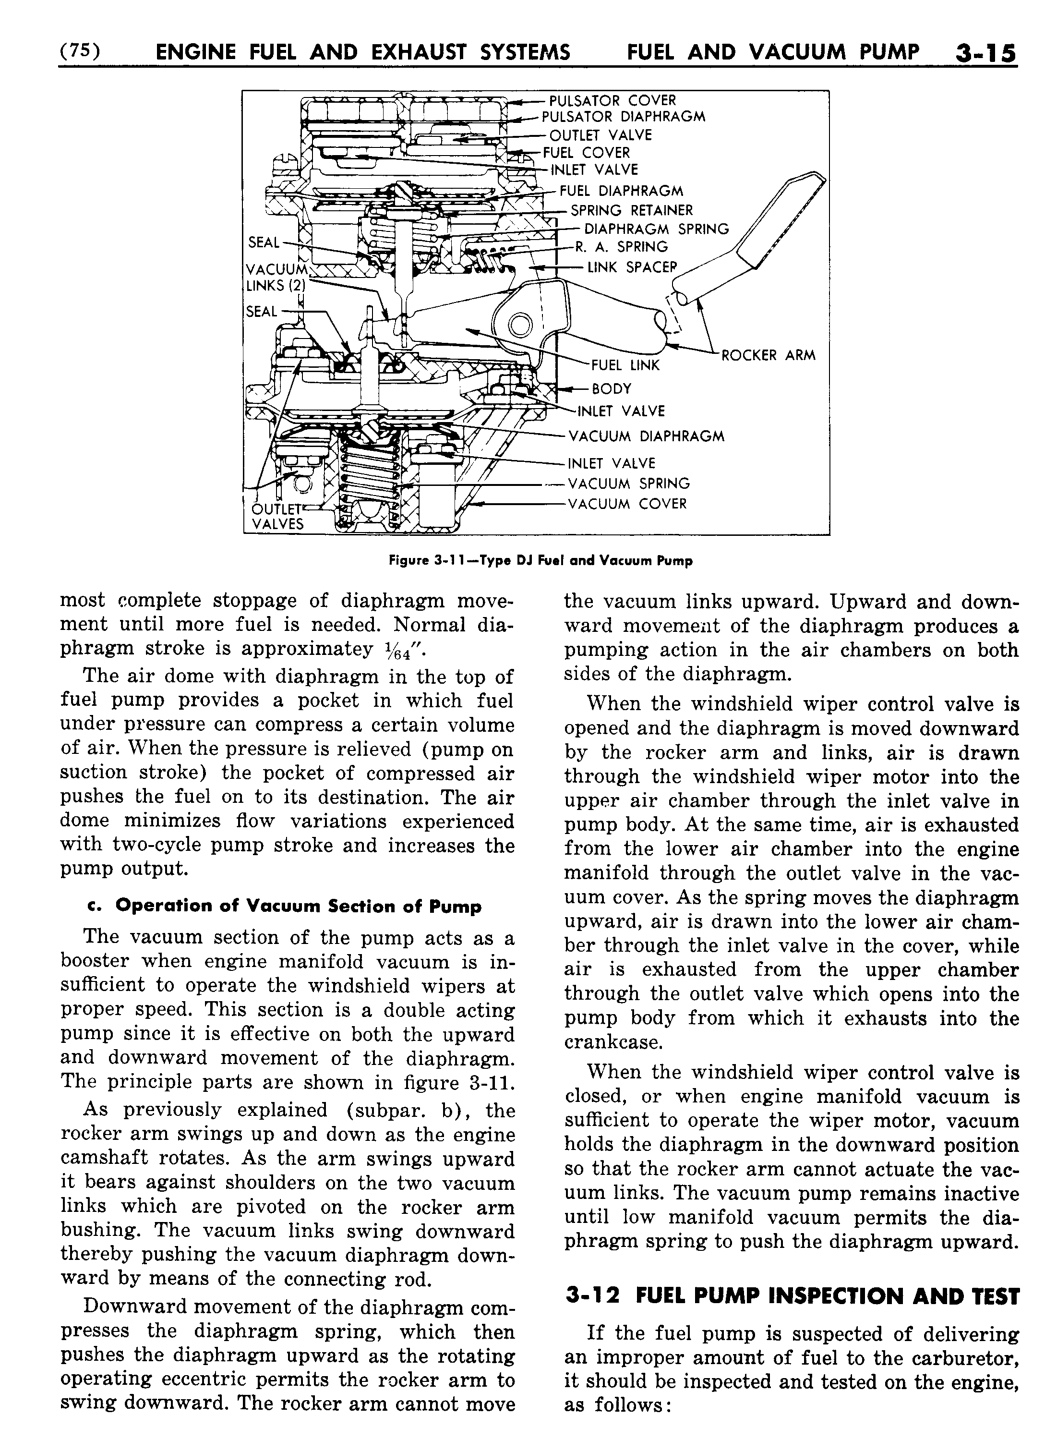 n_04 1955 Buick Shop Manual - Engine Fuel & Exhaust-015-015.jpg